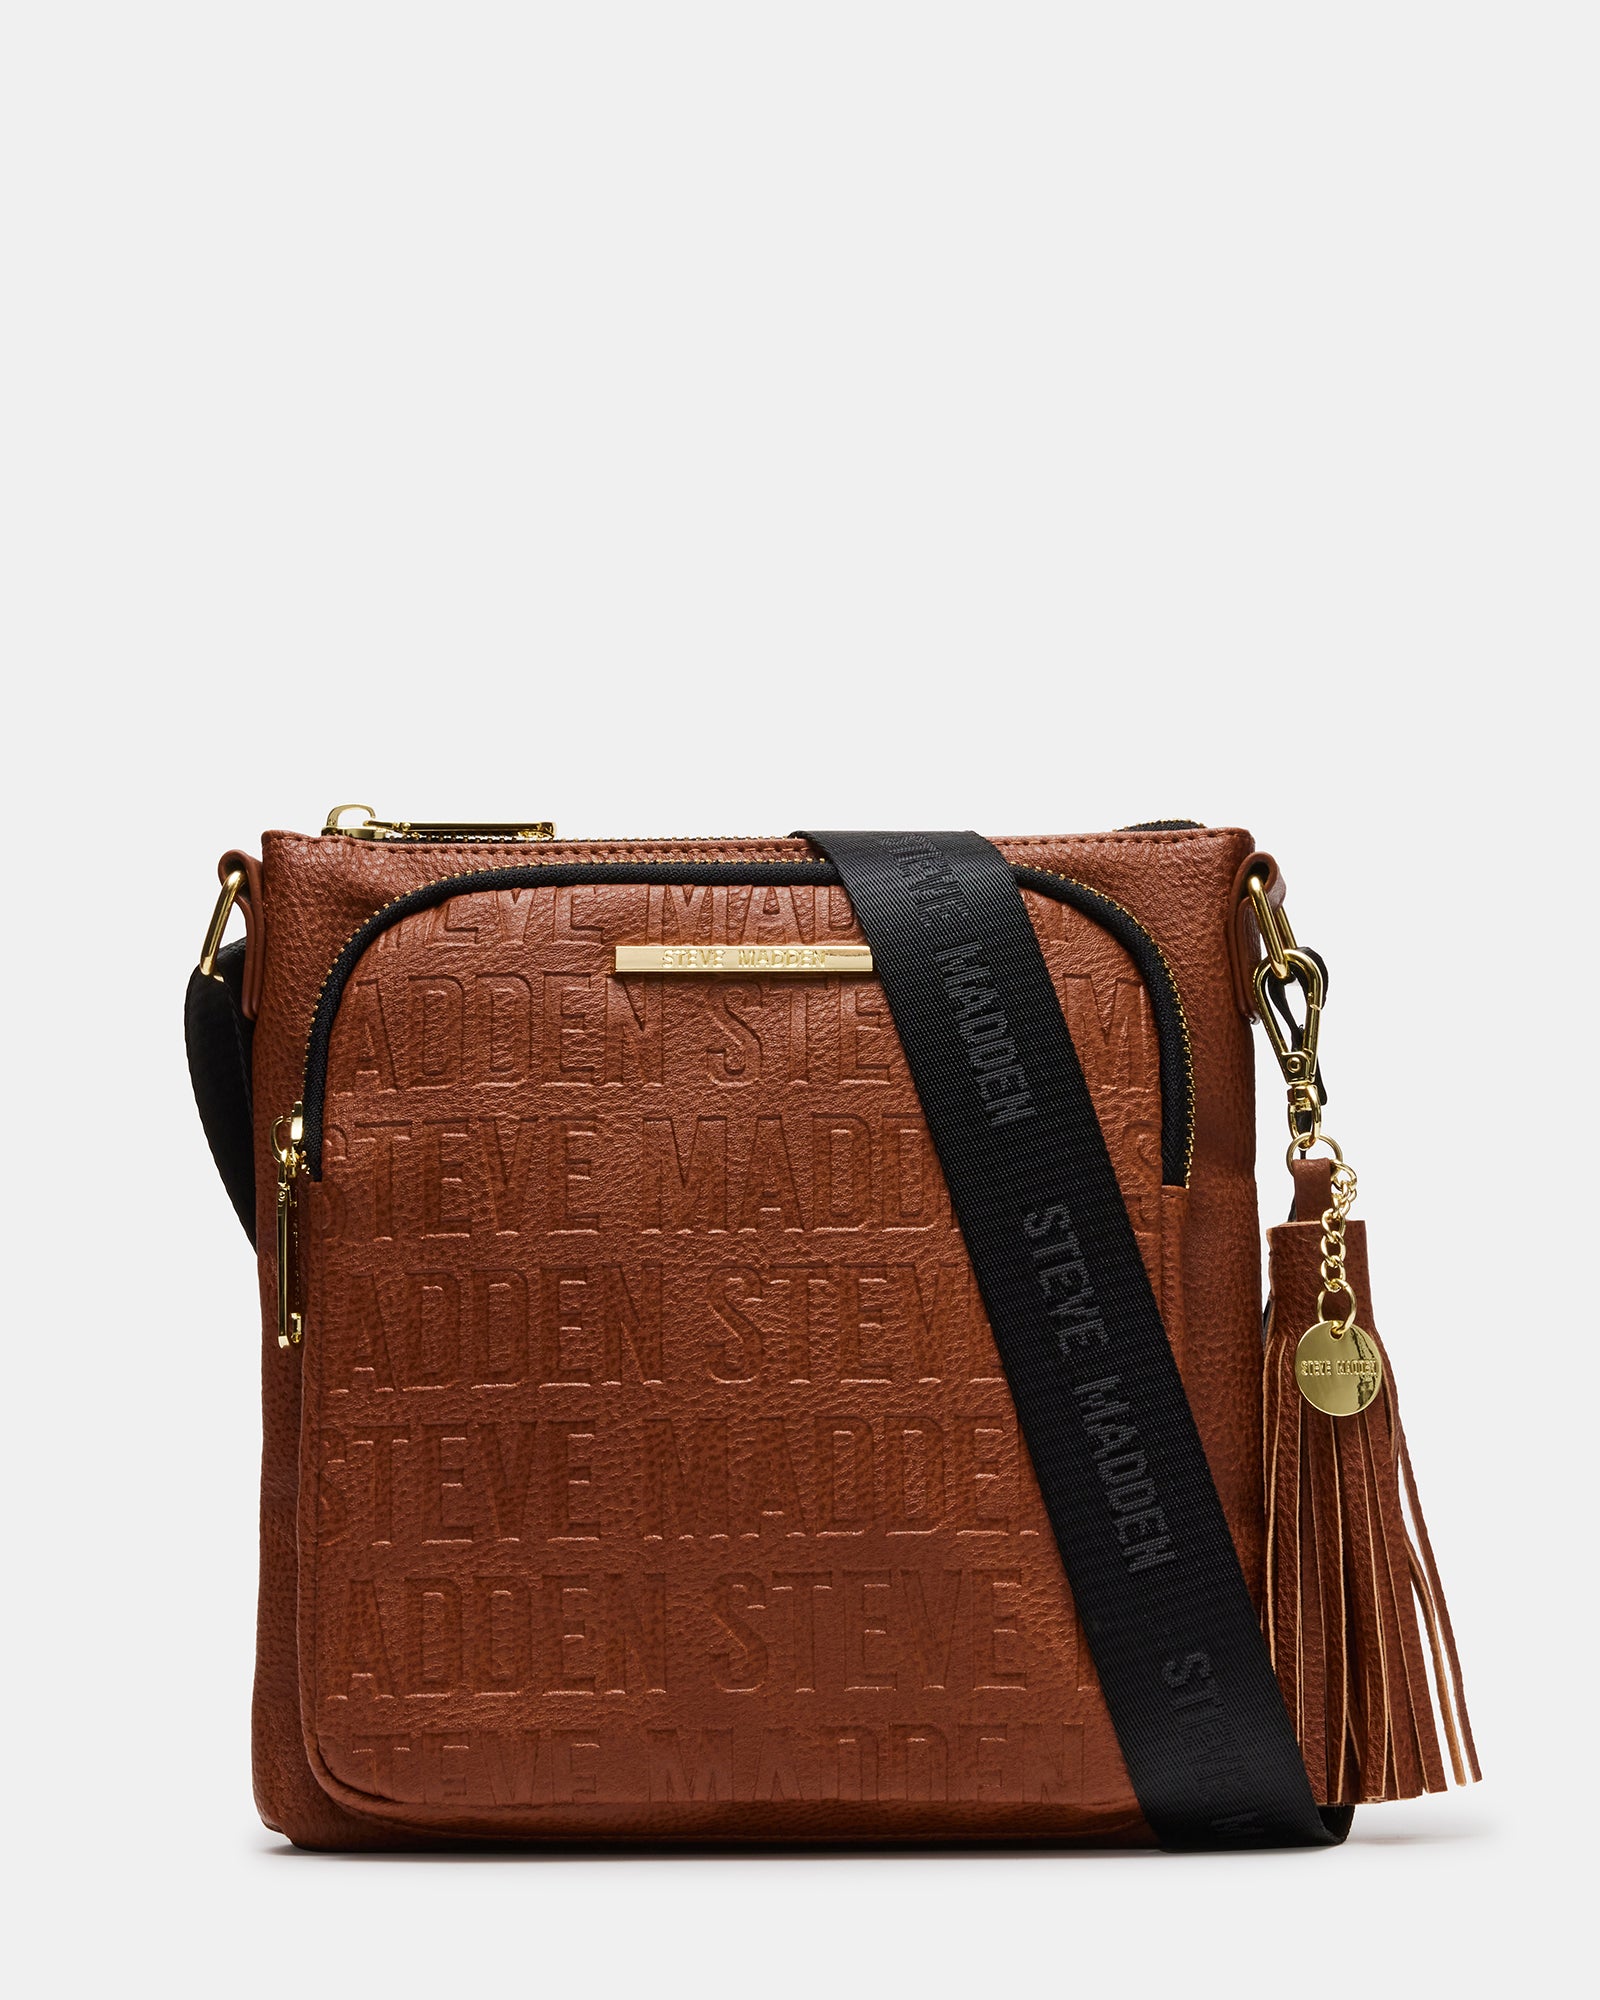 All Women's Handbags | Crossbody & Shoulder Bags, Clutches & Belt